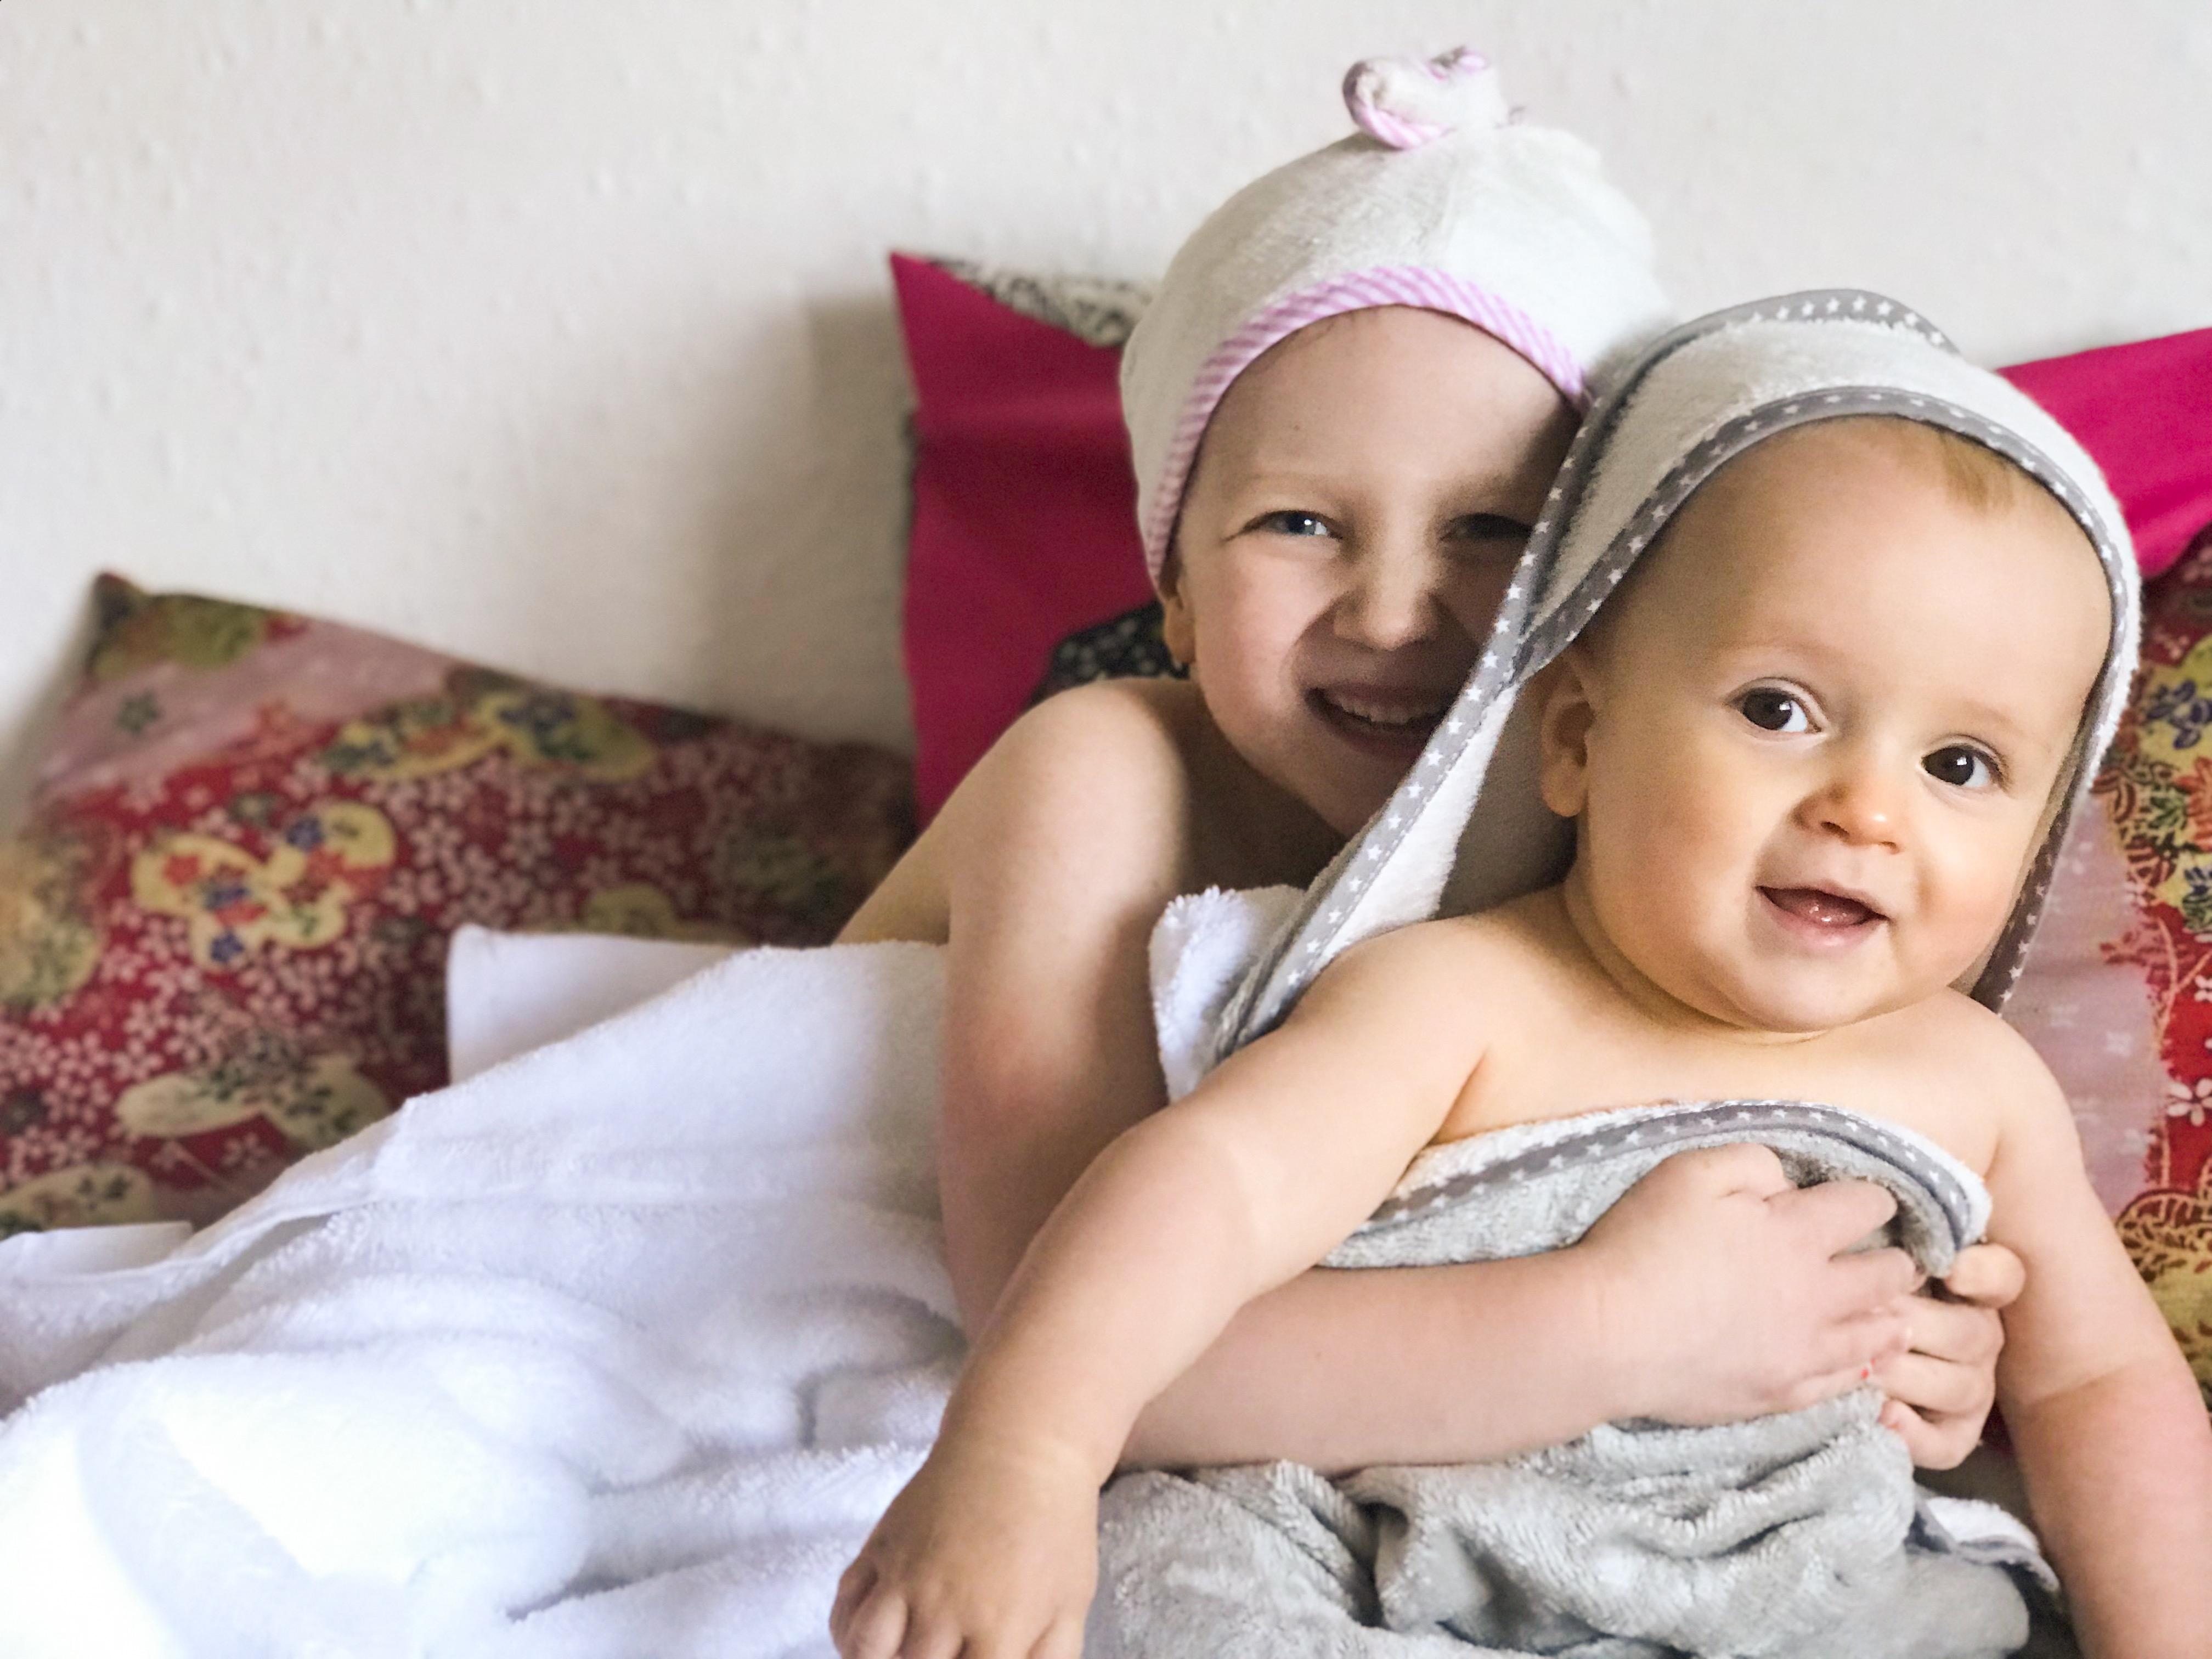 cuddledry review, baby bath towel, best baby towel, cuddledry